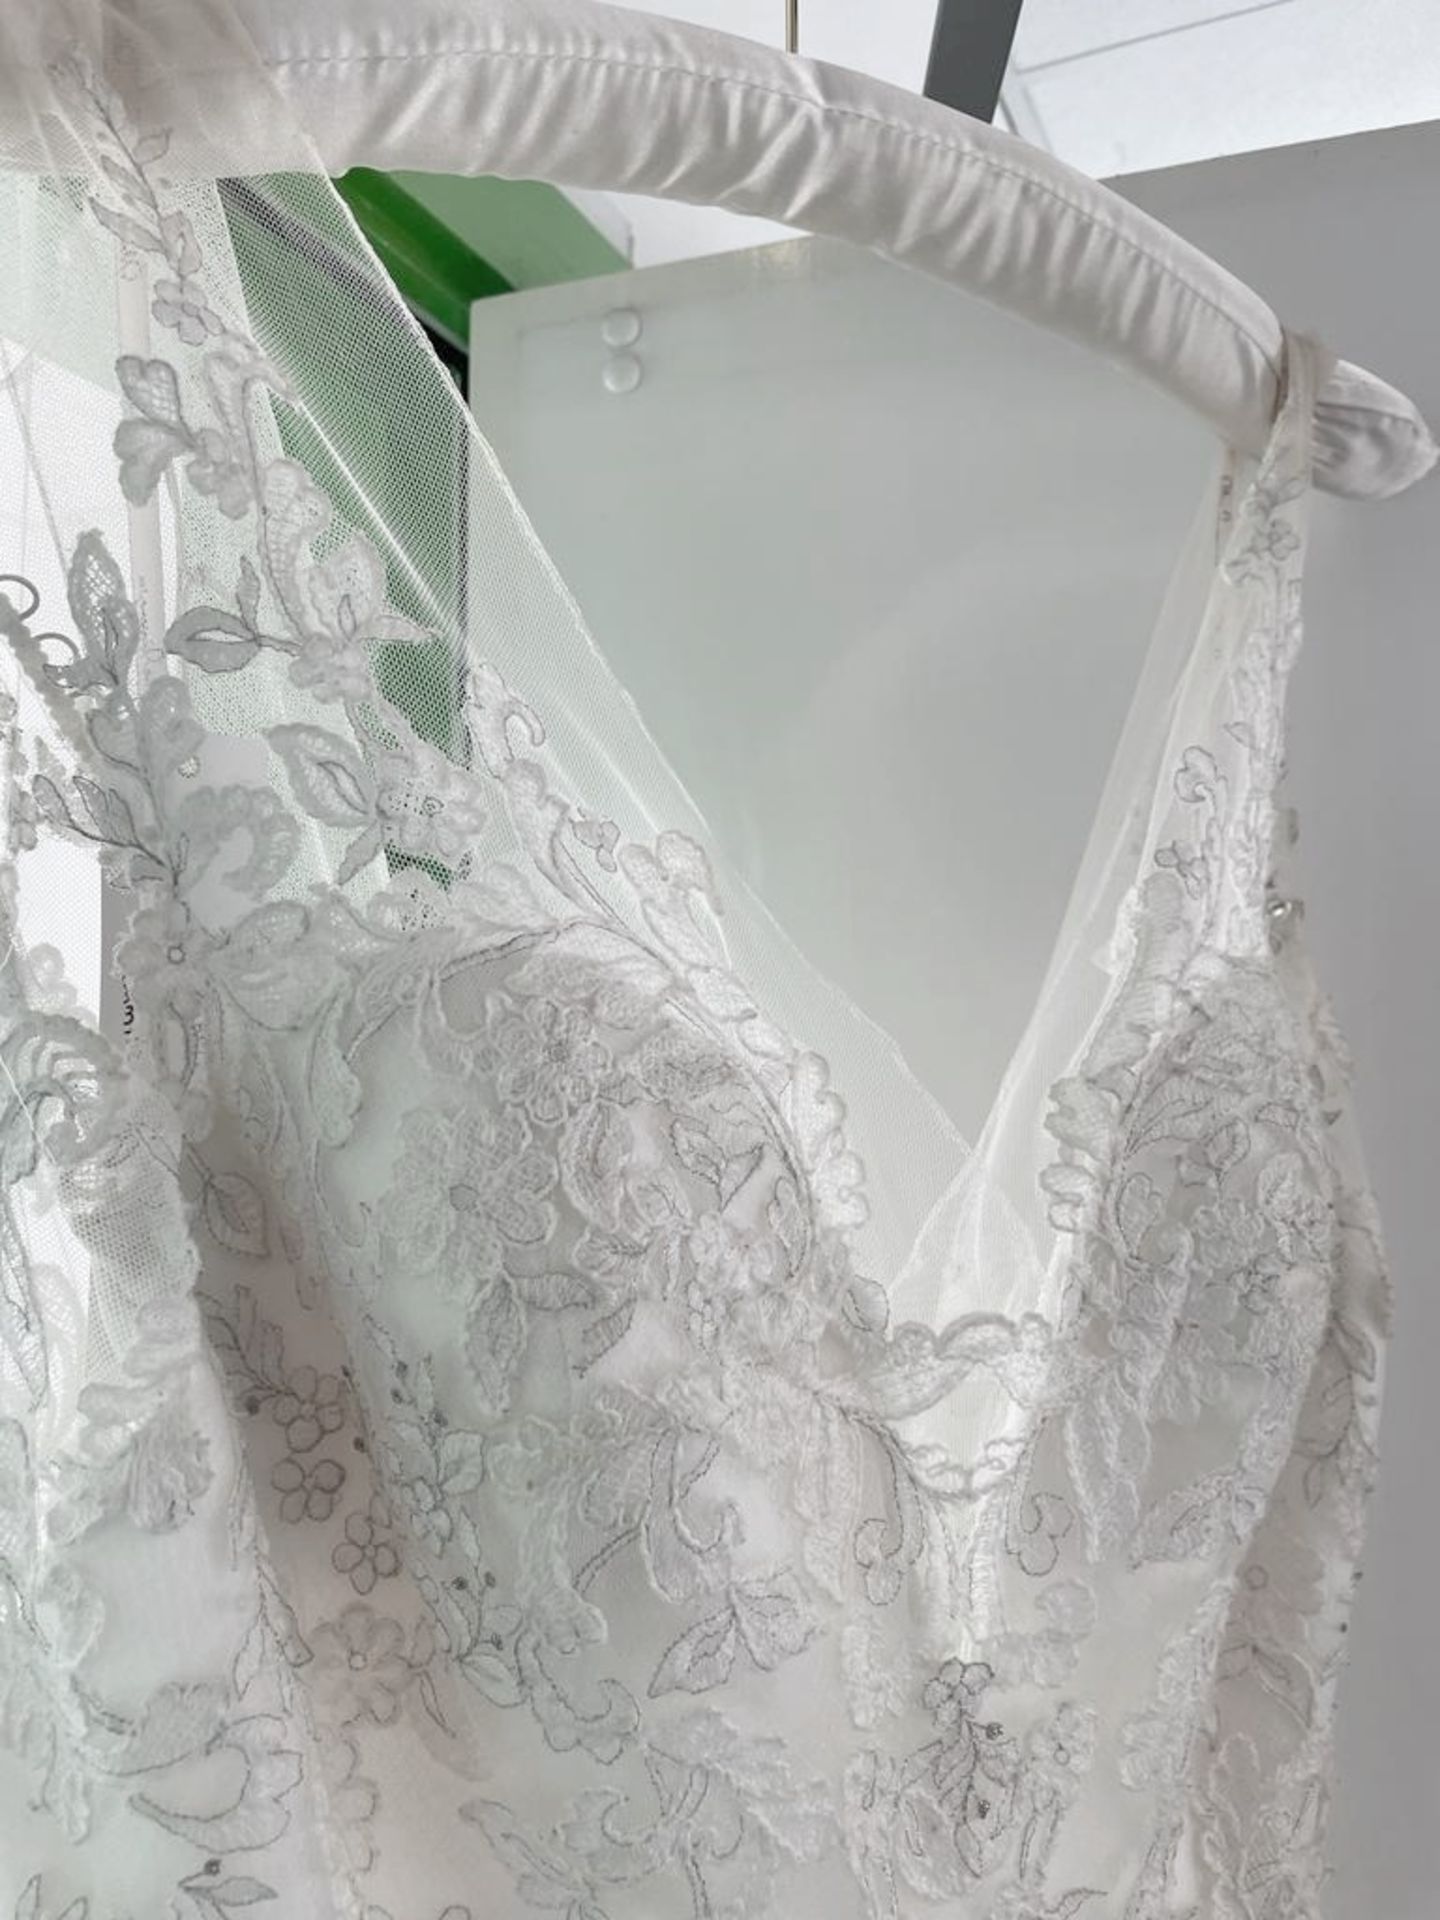 1 x REBECCA INGRAM 'Camille' Designer Wedding Dress Bridal Gown - Size: UK 10 - Original RRP £1,450 - Image 3 of 15